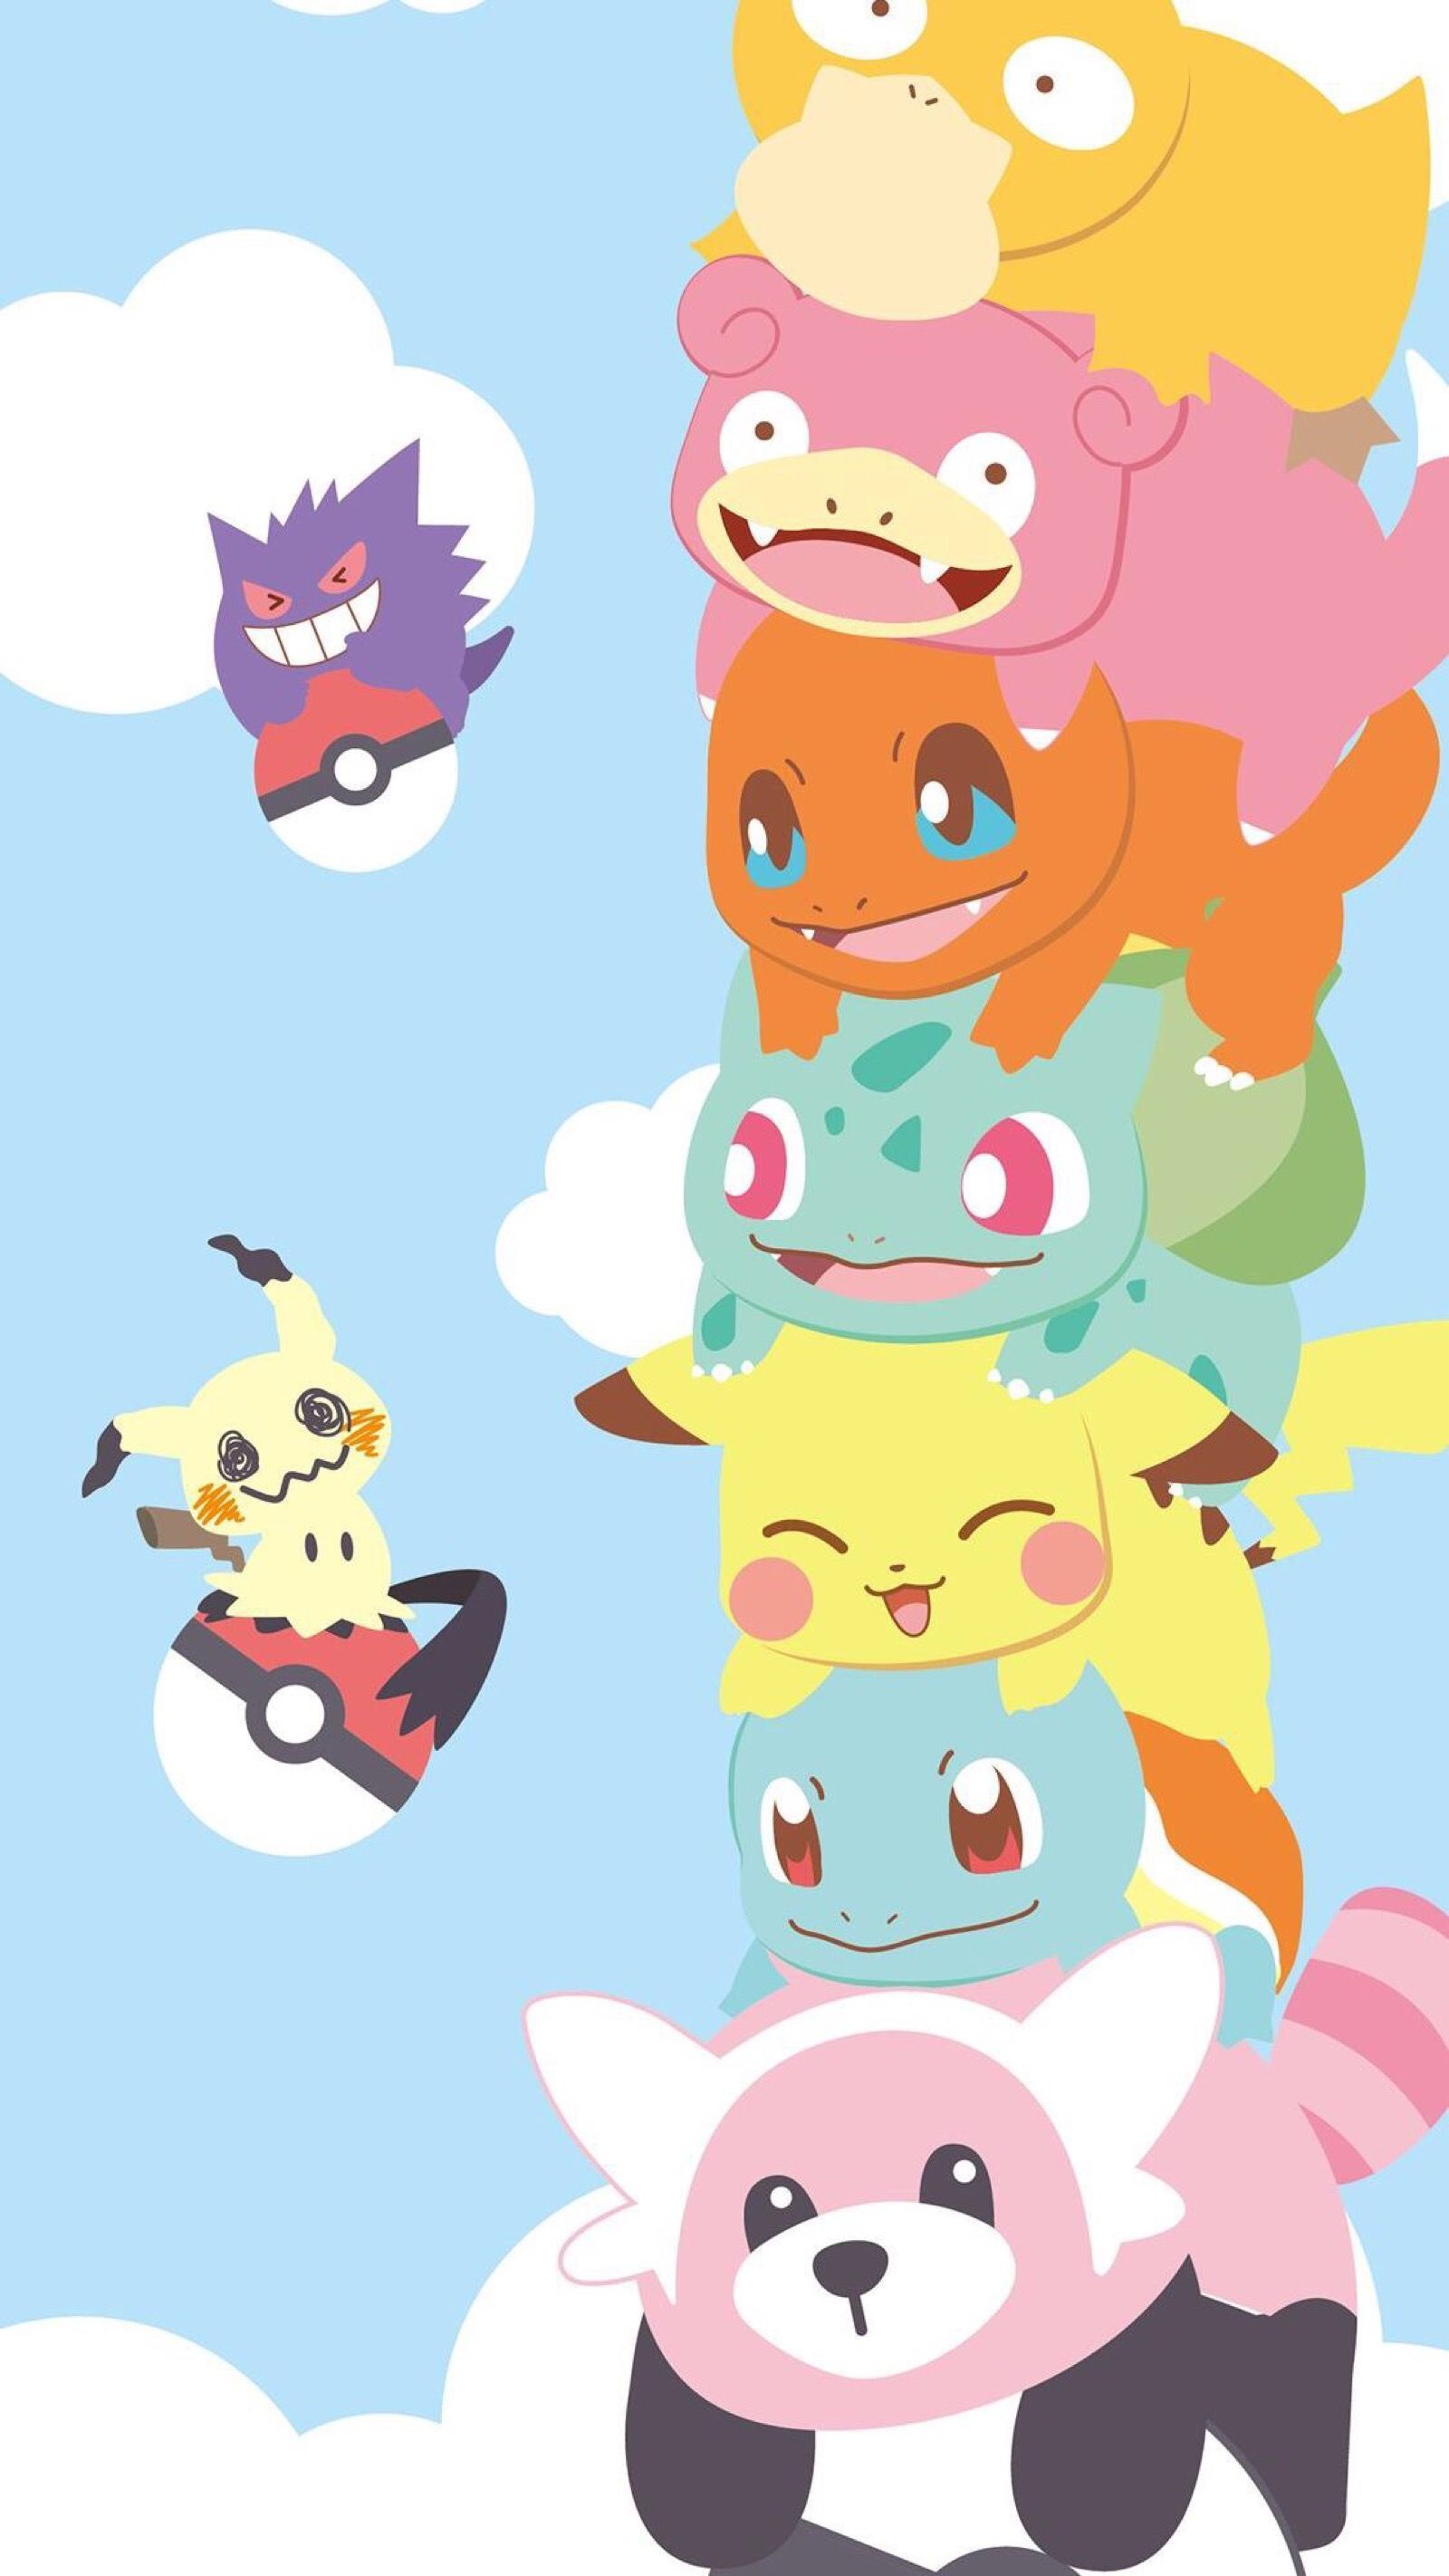 ๑•̀ㅂ•́)و:TropicalLunar. Cute pokemon wallpaper, Pokemon, Cute pokemon